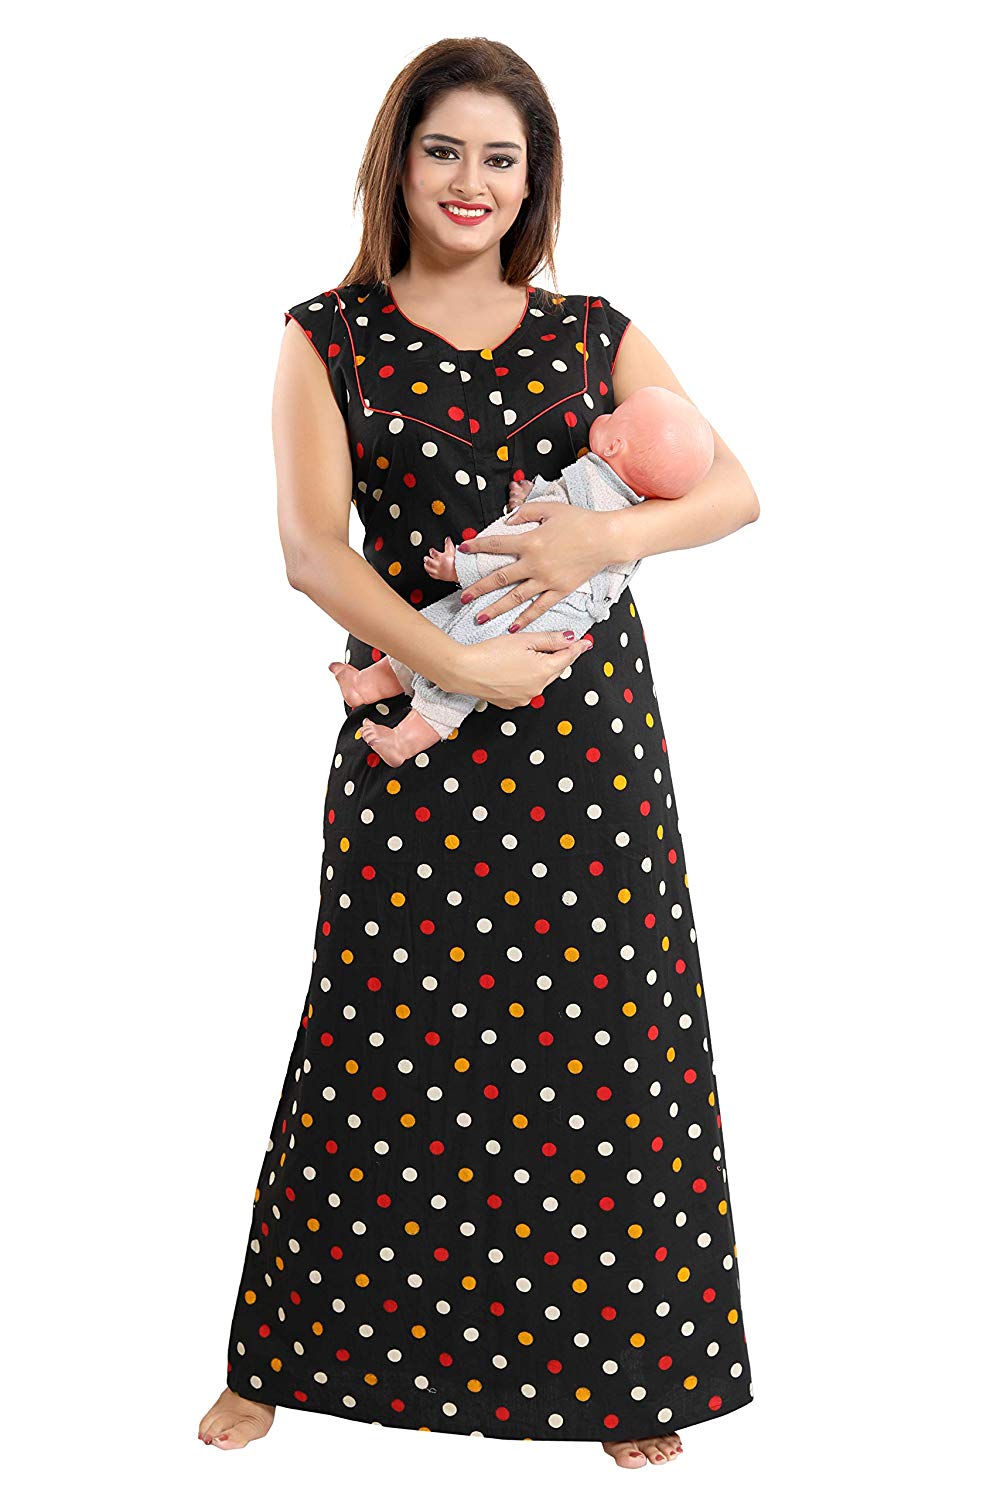 Women's Beautiful Print Cotton Fabric Feeding/Maternity/Nursing Nighty/Nightwear. Sleeveless Pattern